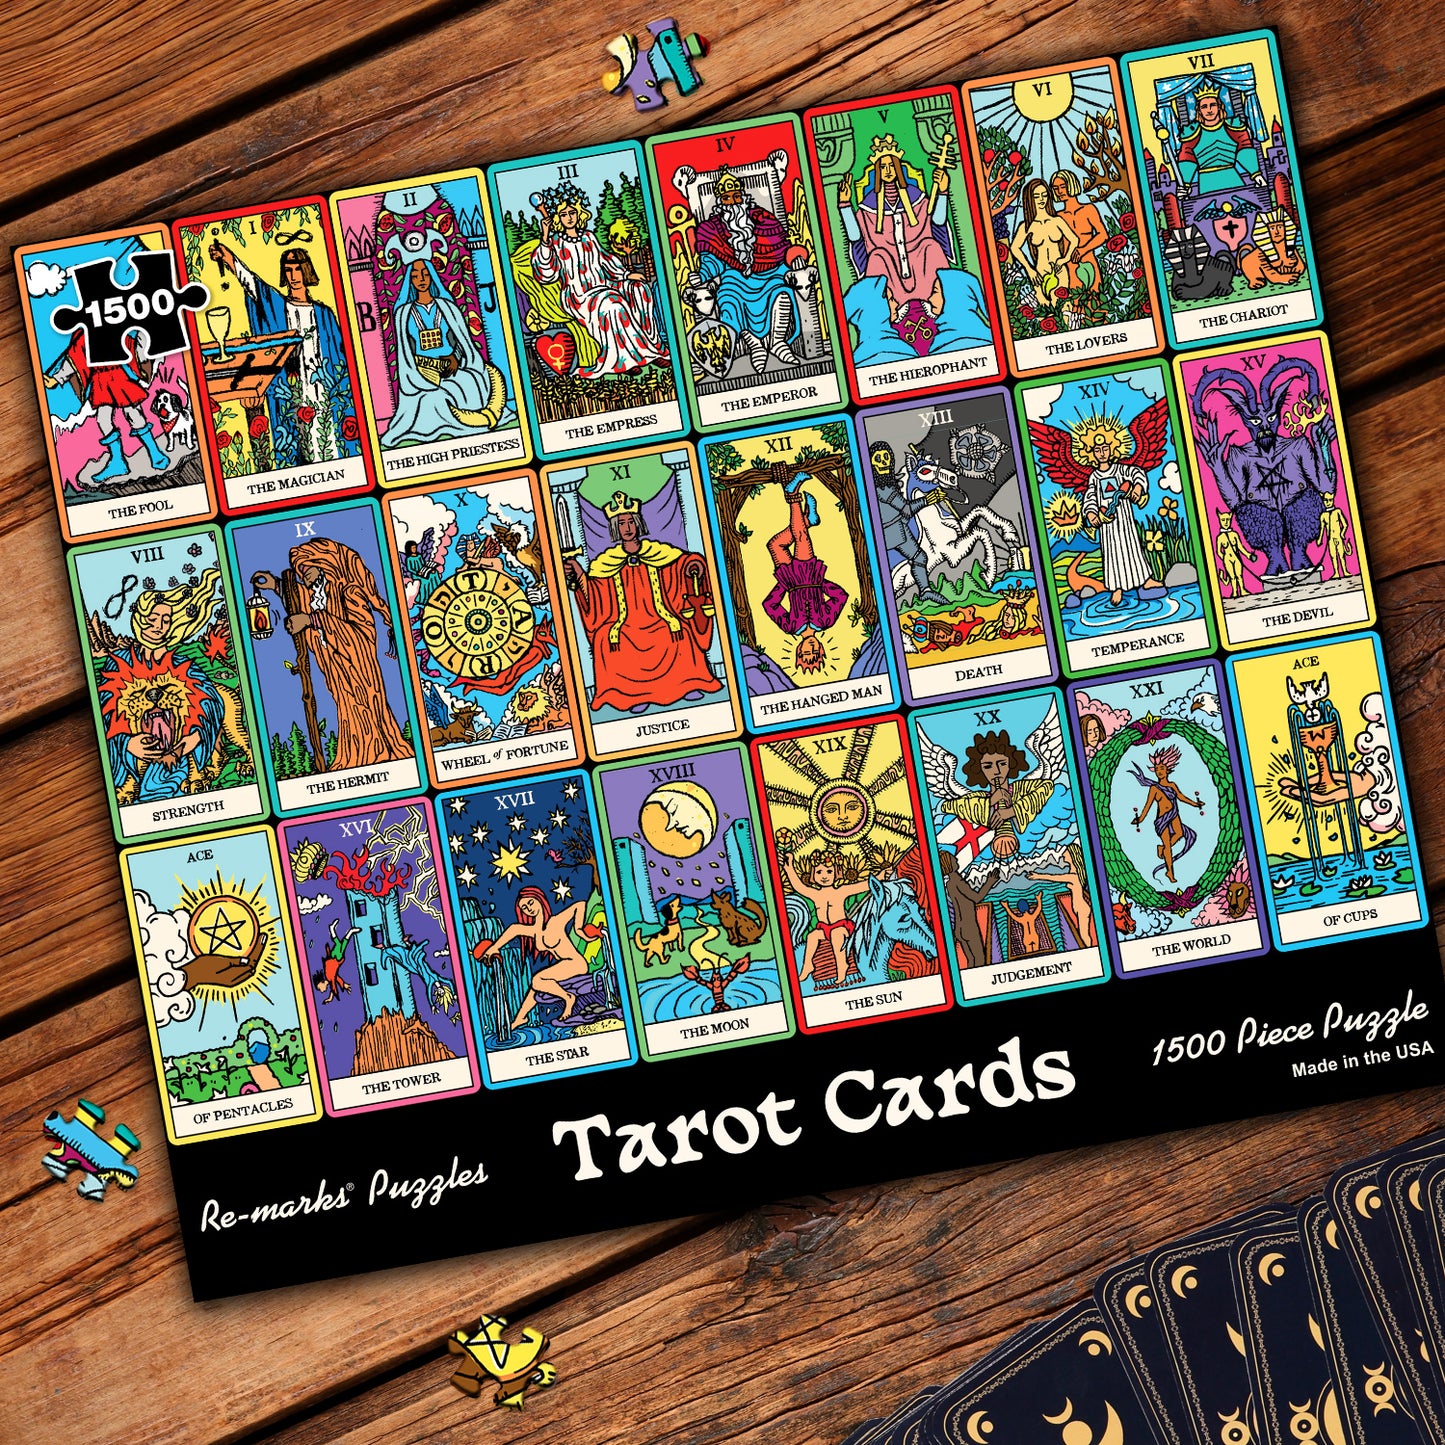 Tarot Card Collage 1500-Piece Jigsaw Puzzle